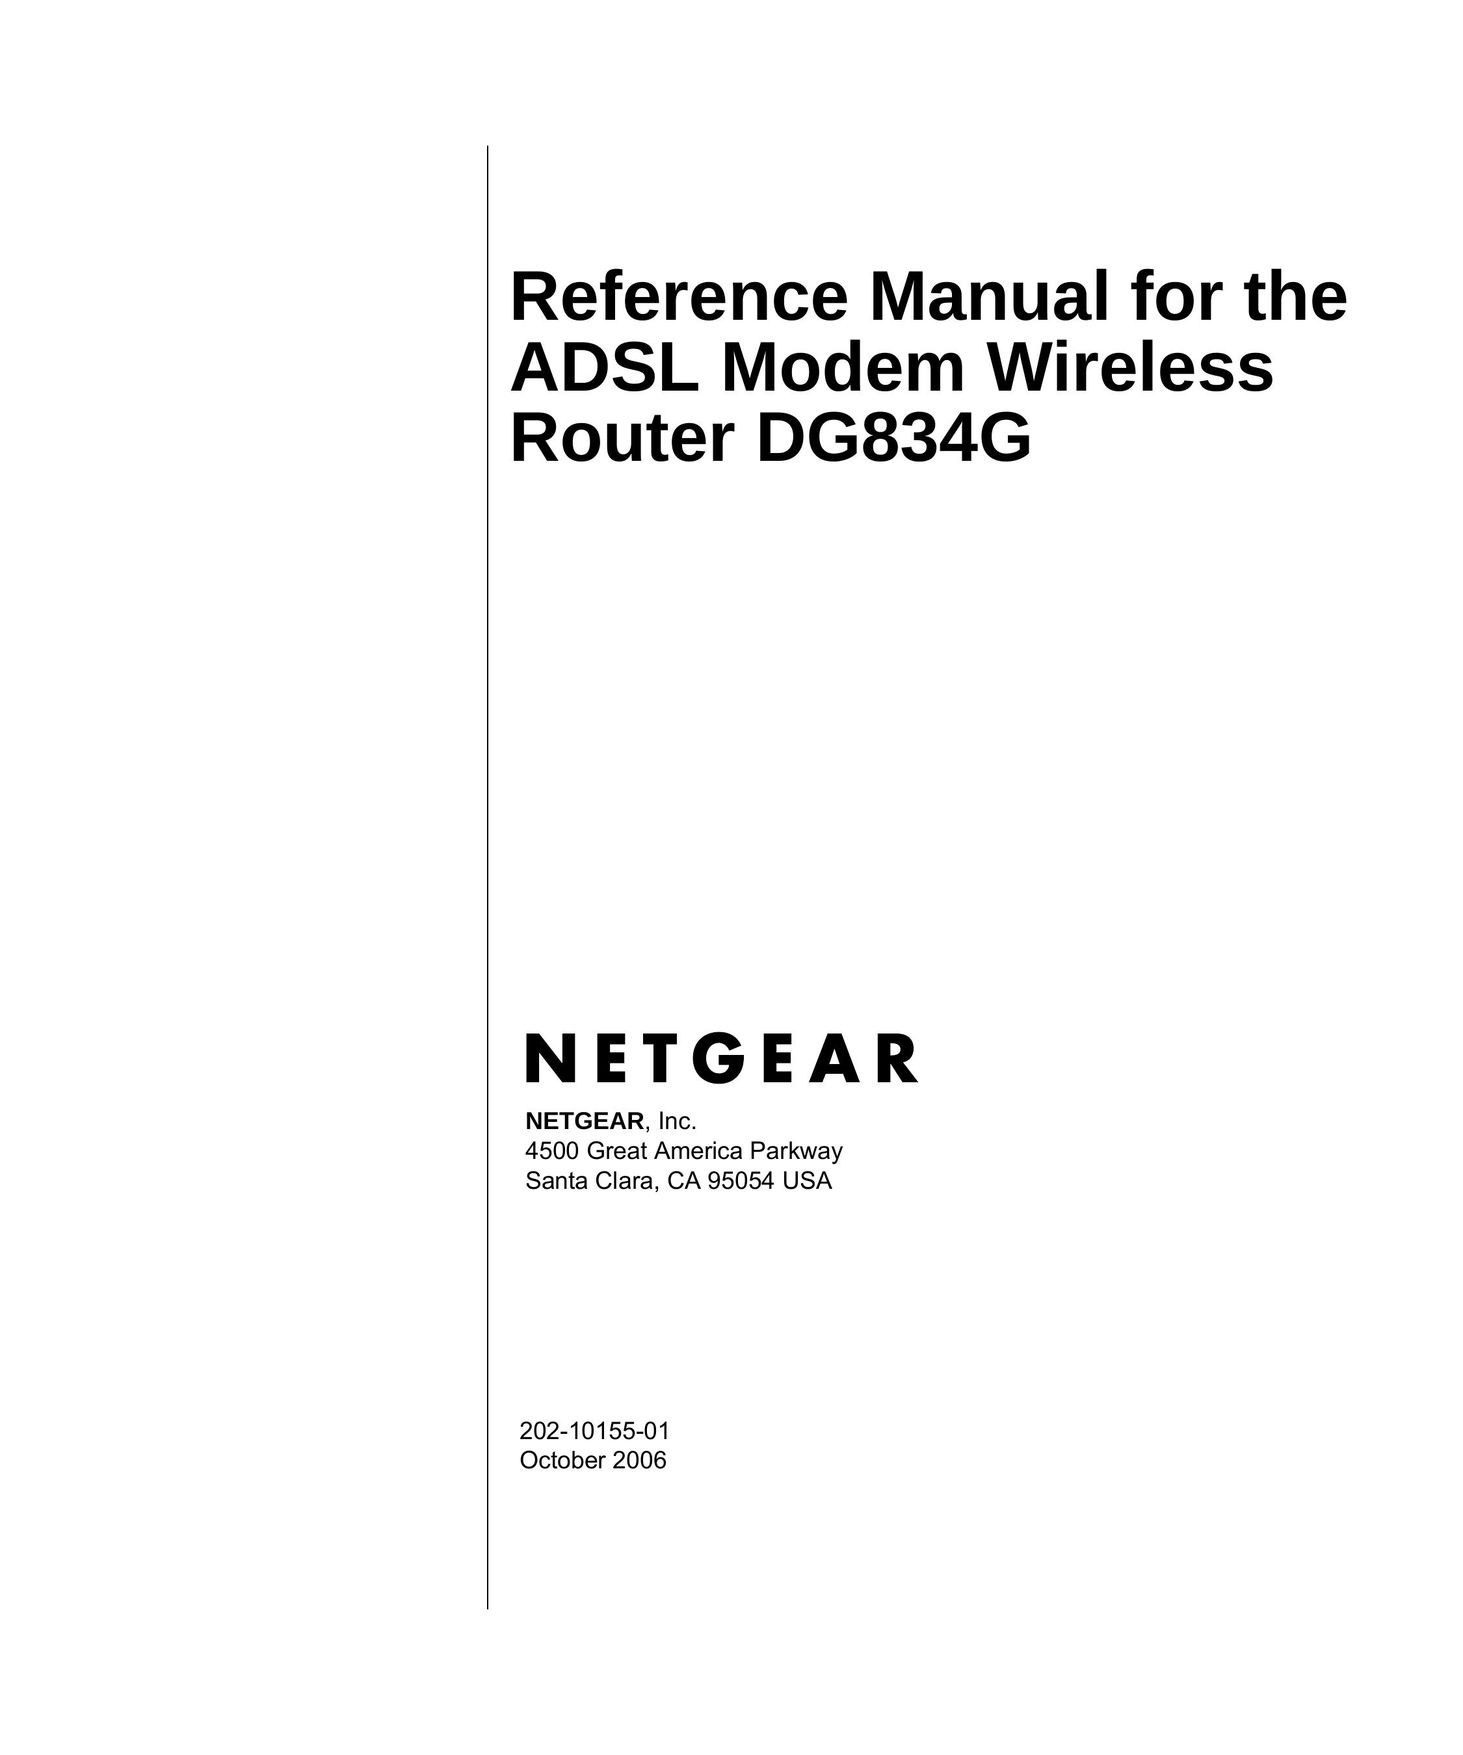 NETGEAR DG834G Network Router User Manual